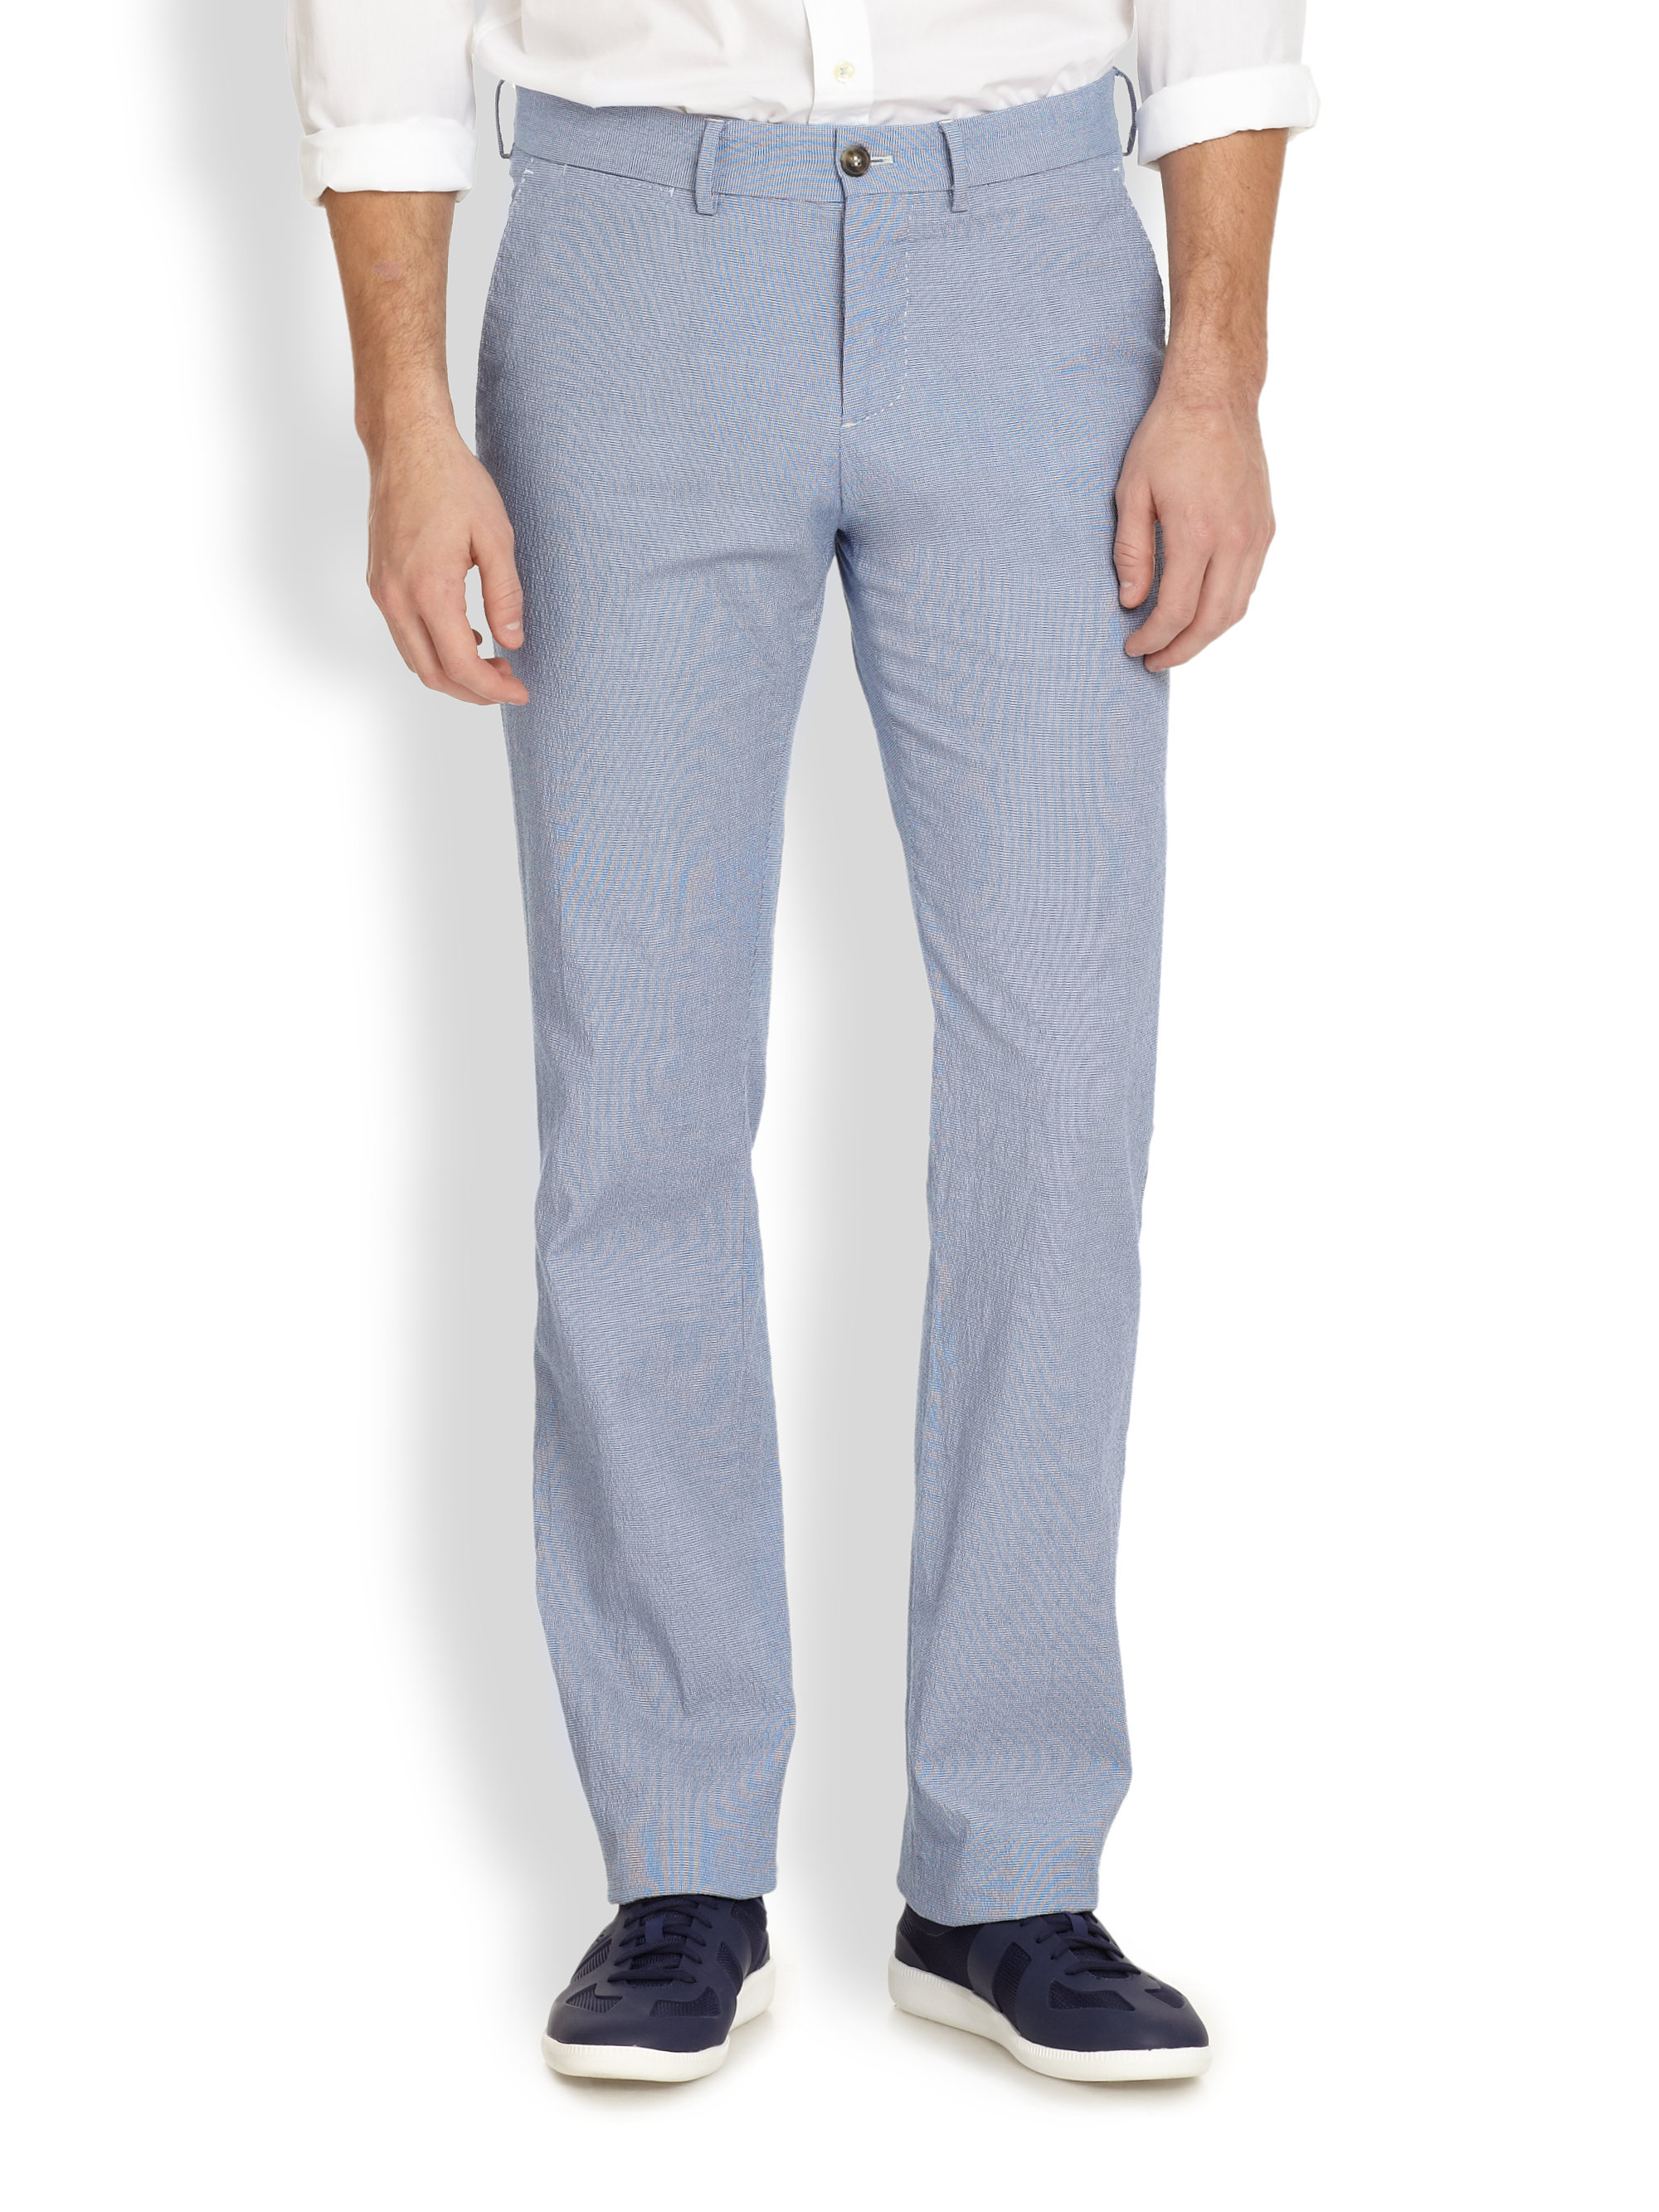 Lyst - Façonnable Seersucker Gingham Cotton Pants in Blue for Men